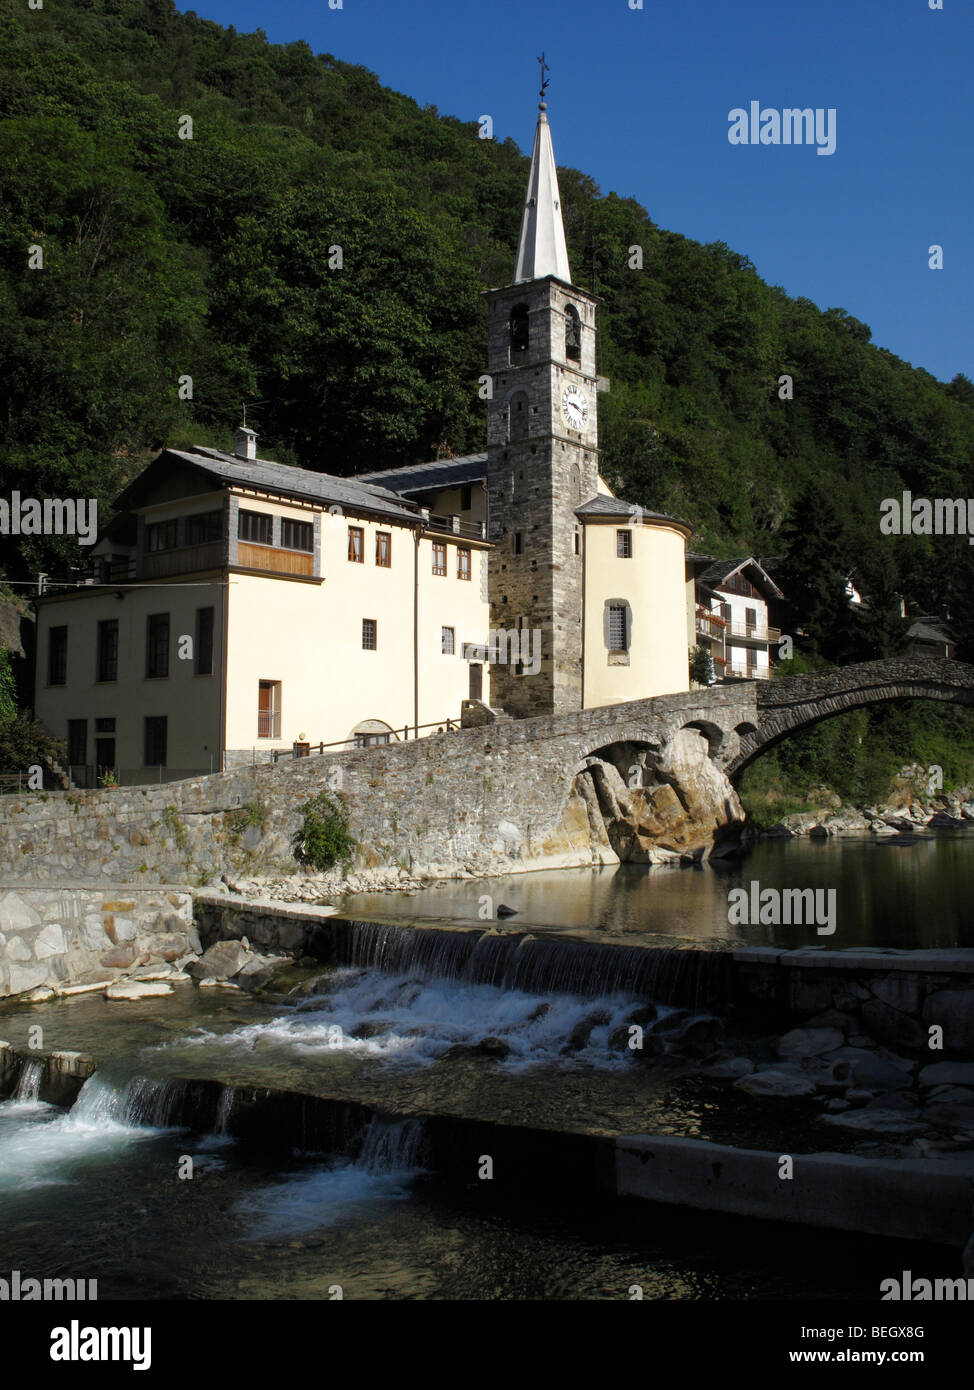 The church in the Comune de Fontainemore in the Italian Alps Stock Photo